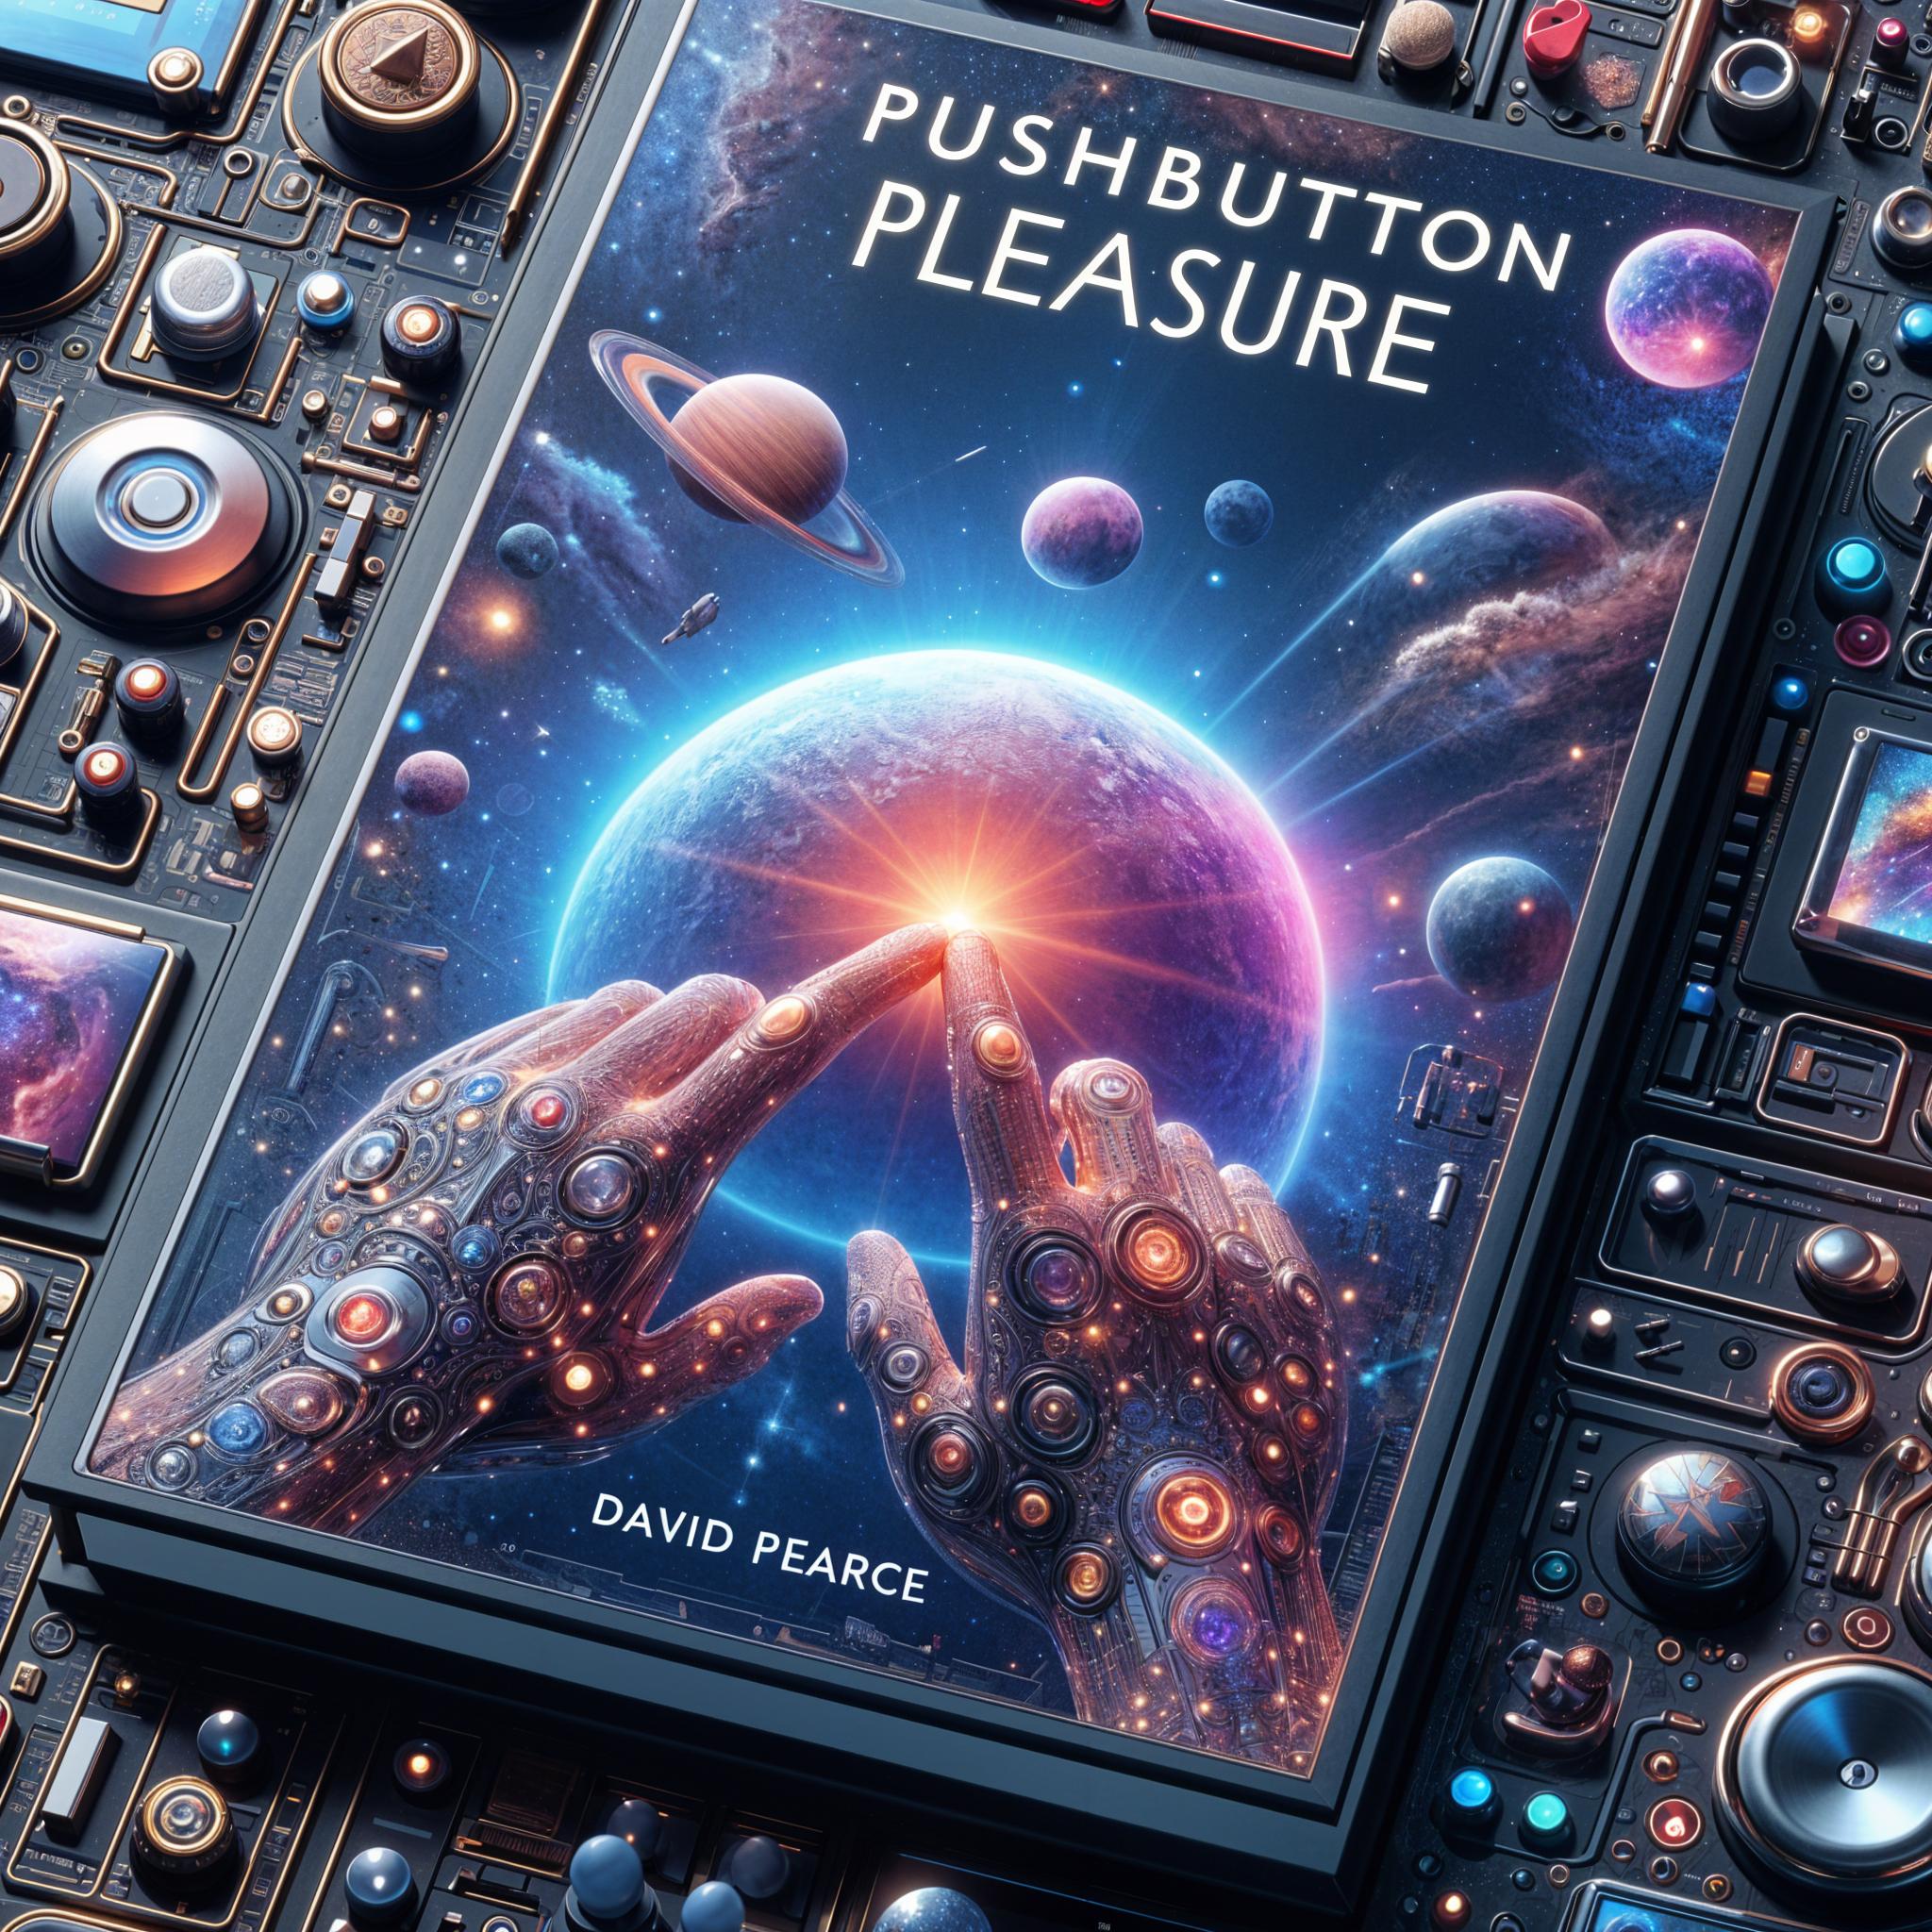 Push-Button Pleasure by David Pearce